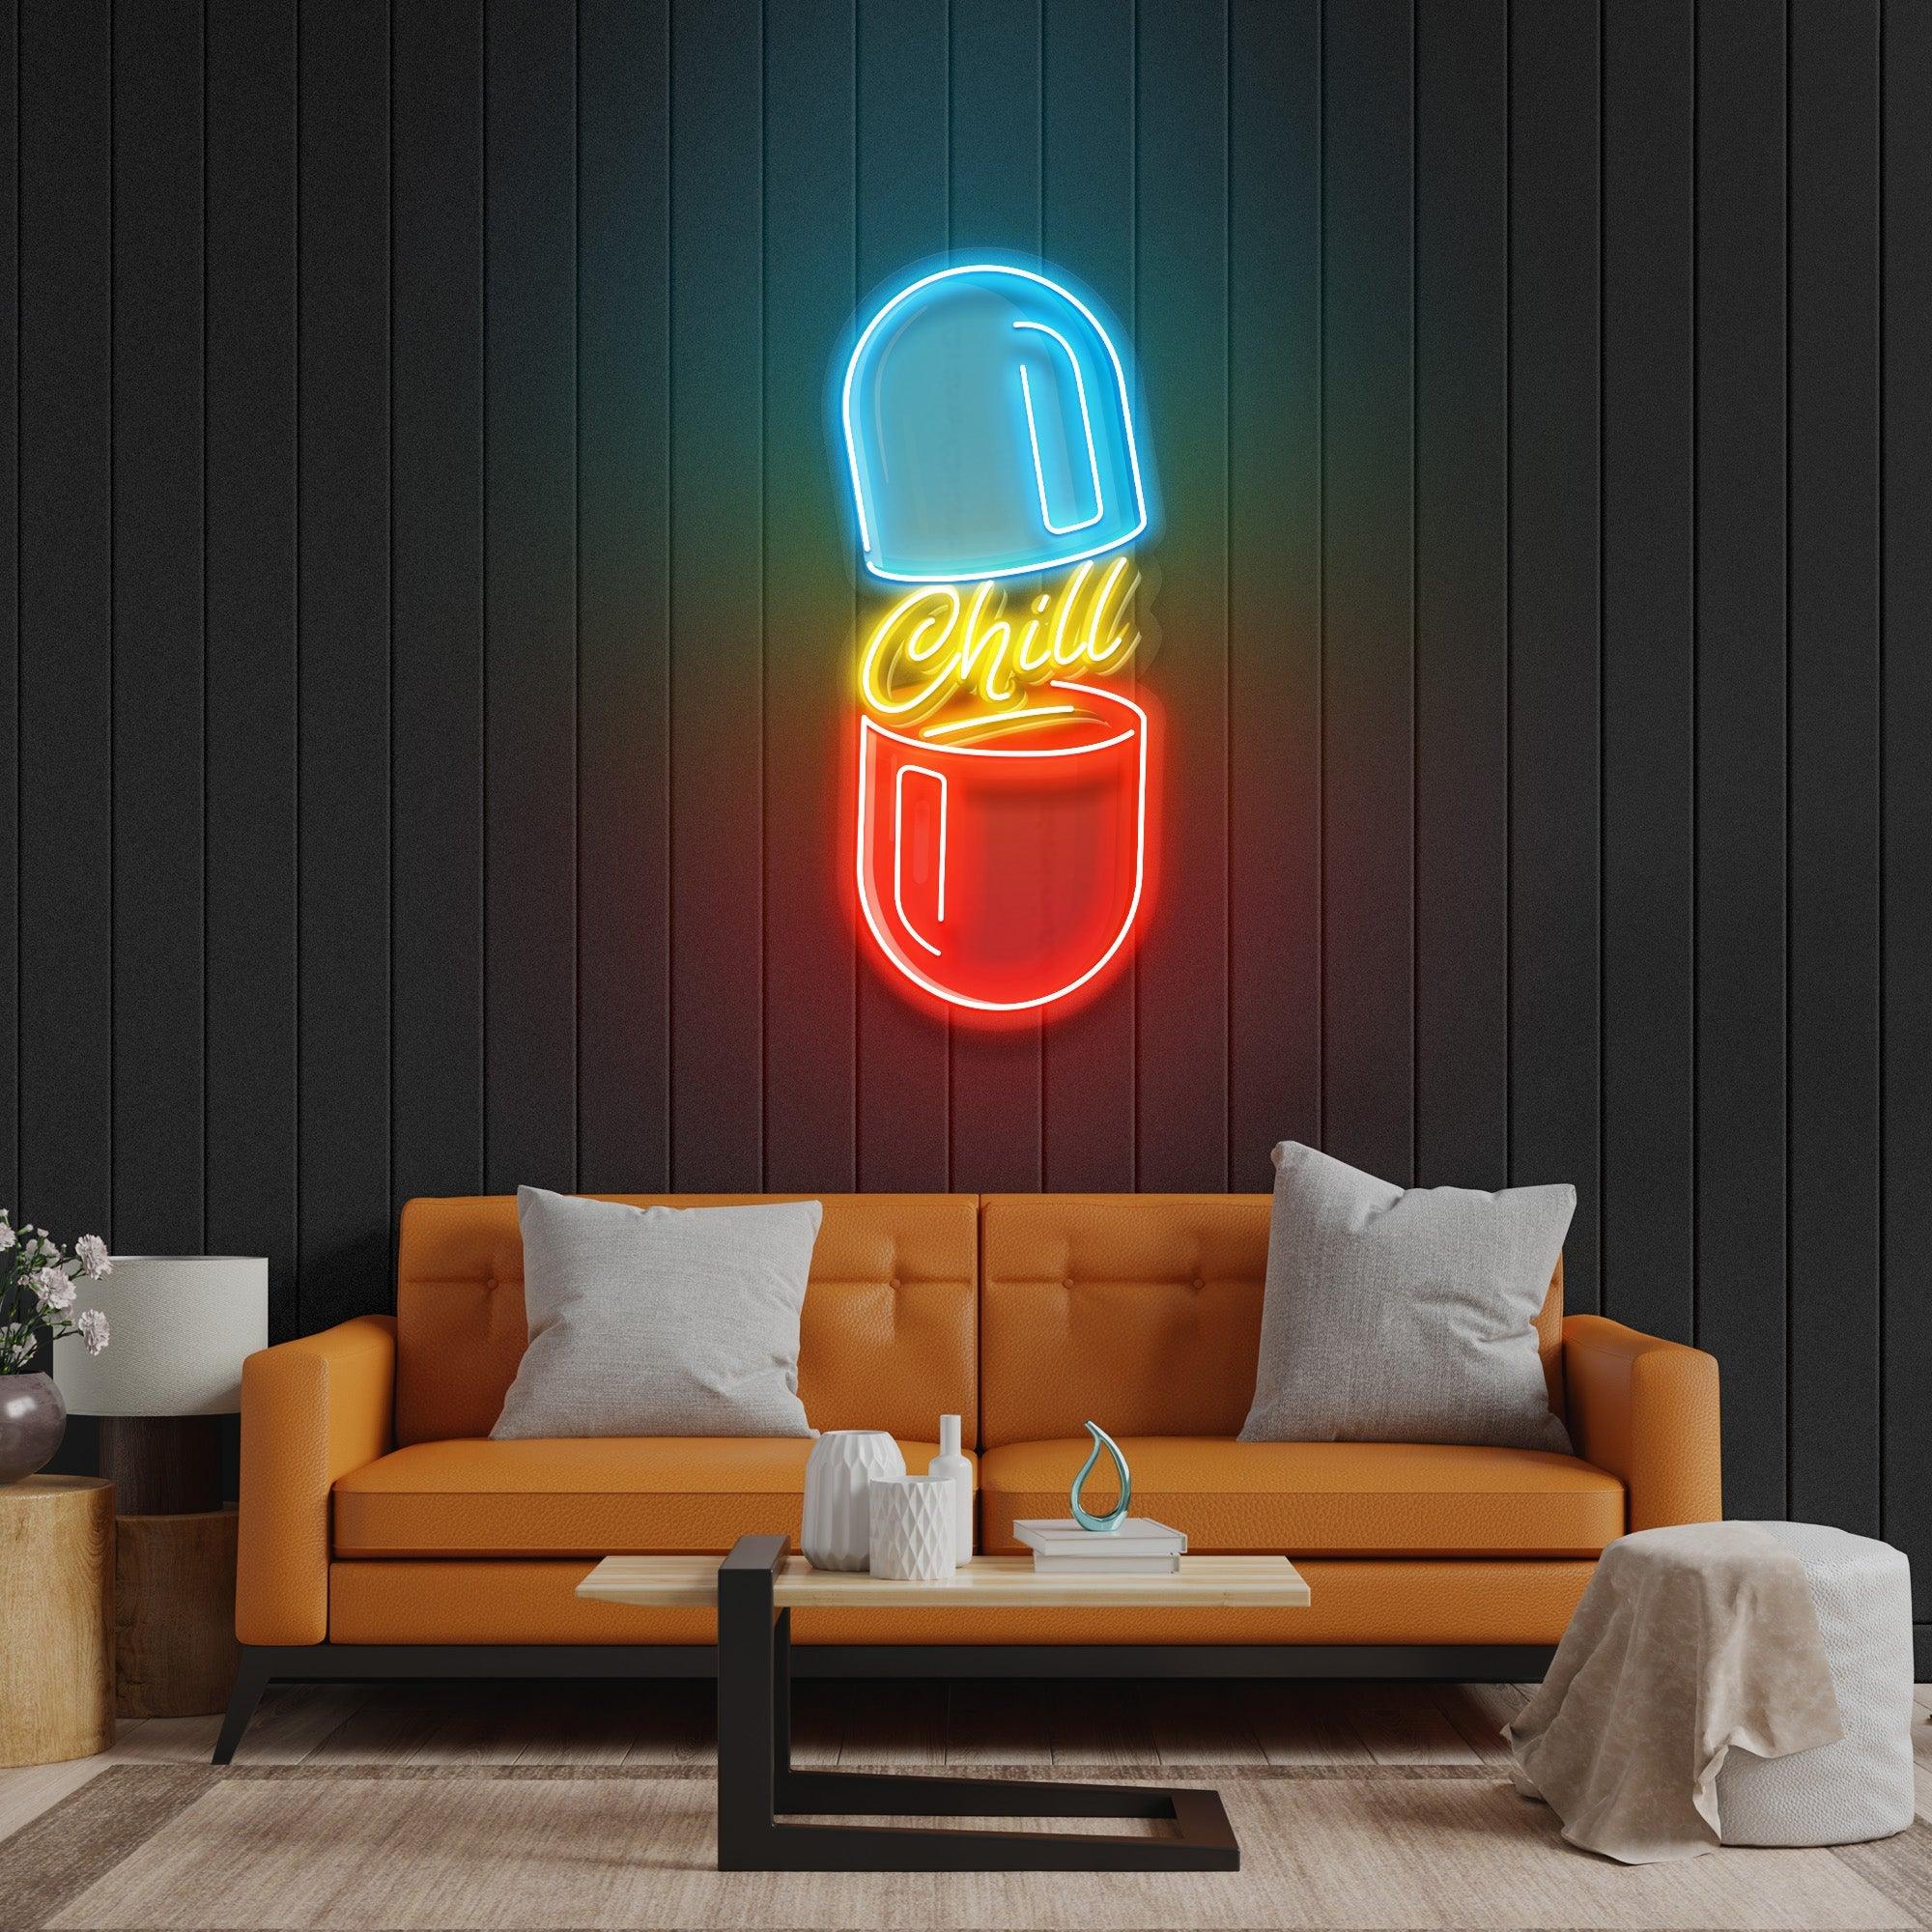 The Chill Pill Led Neon Acrylic Artwork Led Neon Sign Light - Neonbir